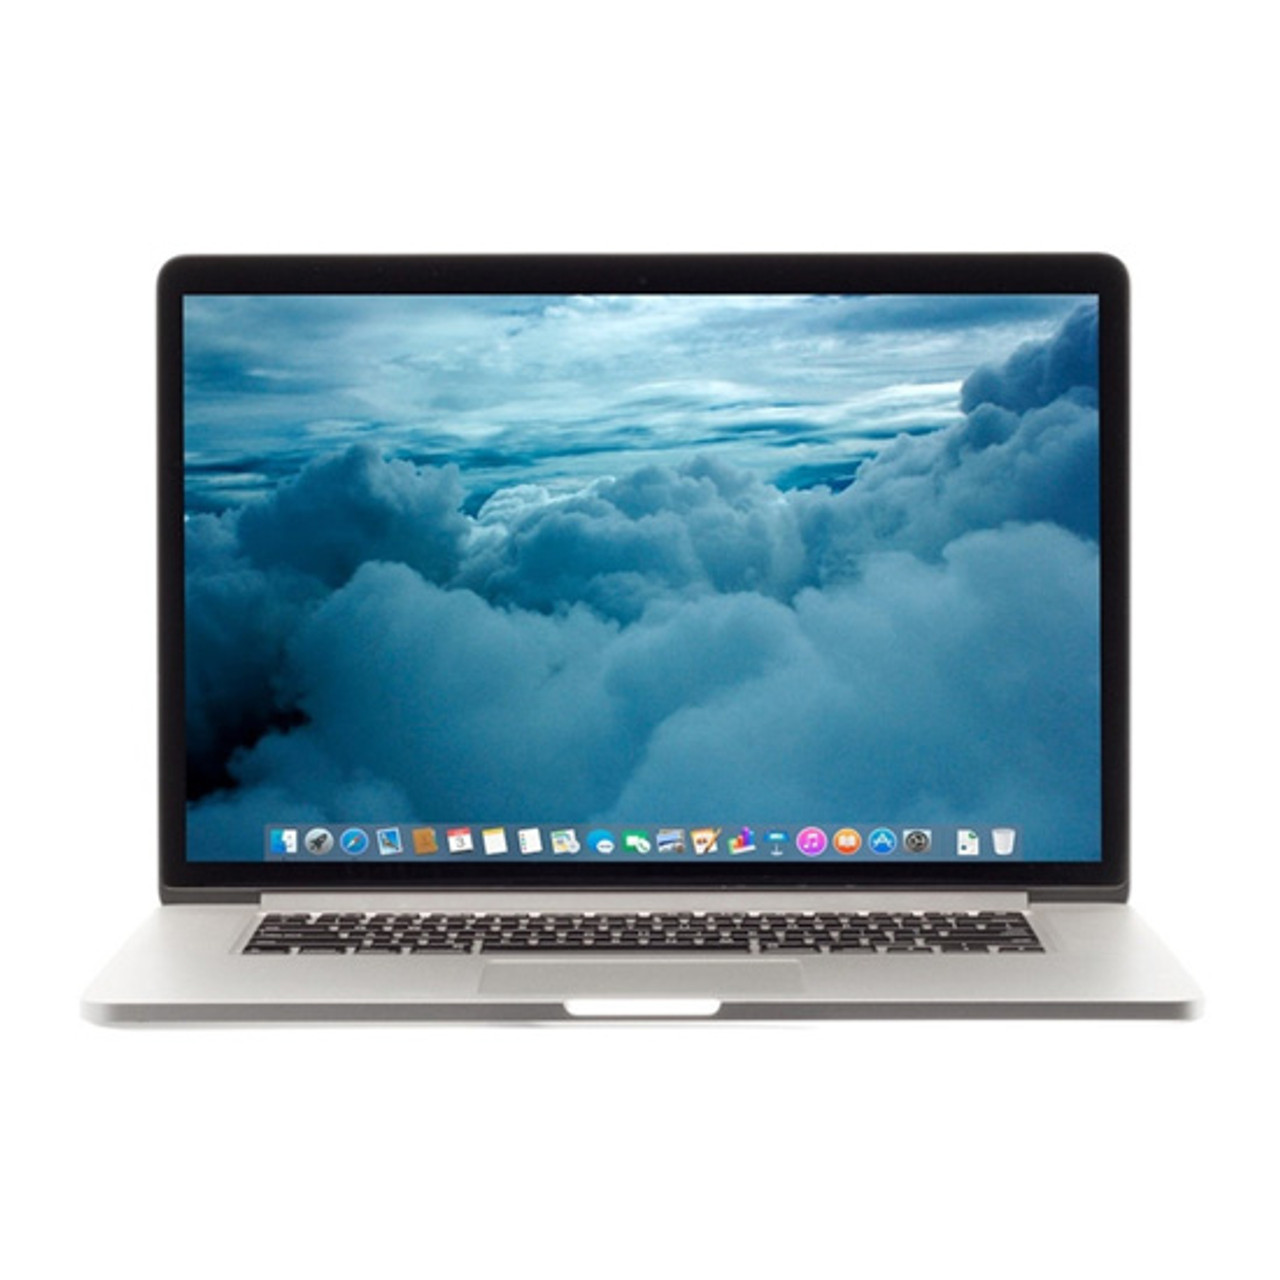 Apple MacBook Pro 15-inch 2.6GHz Quad-core i7 (Mid 2012)